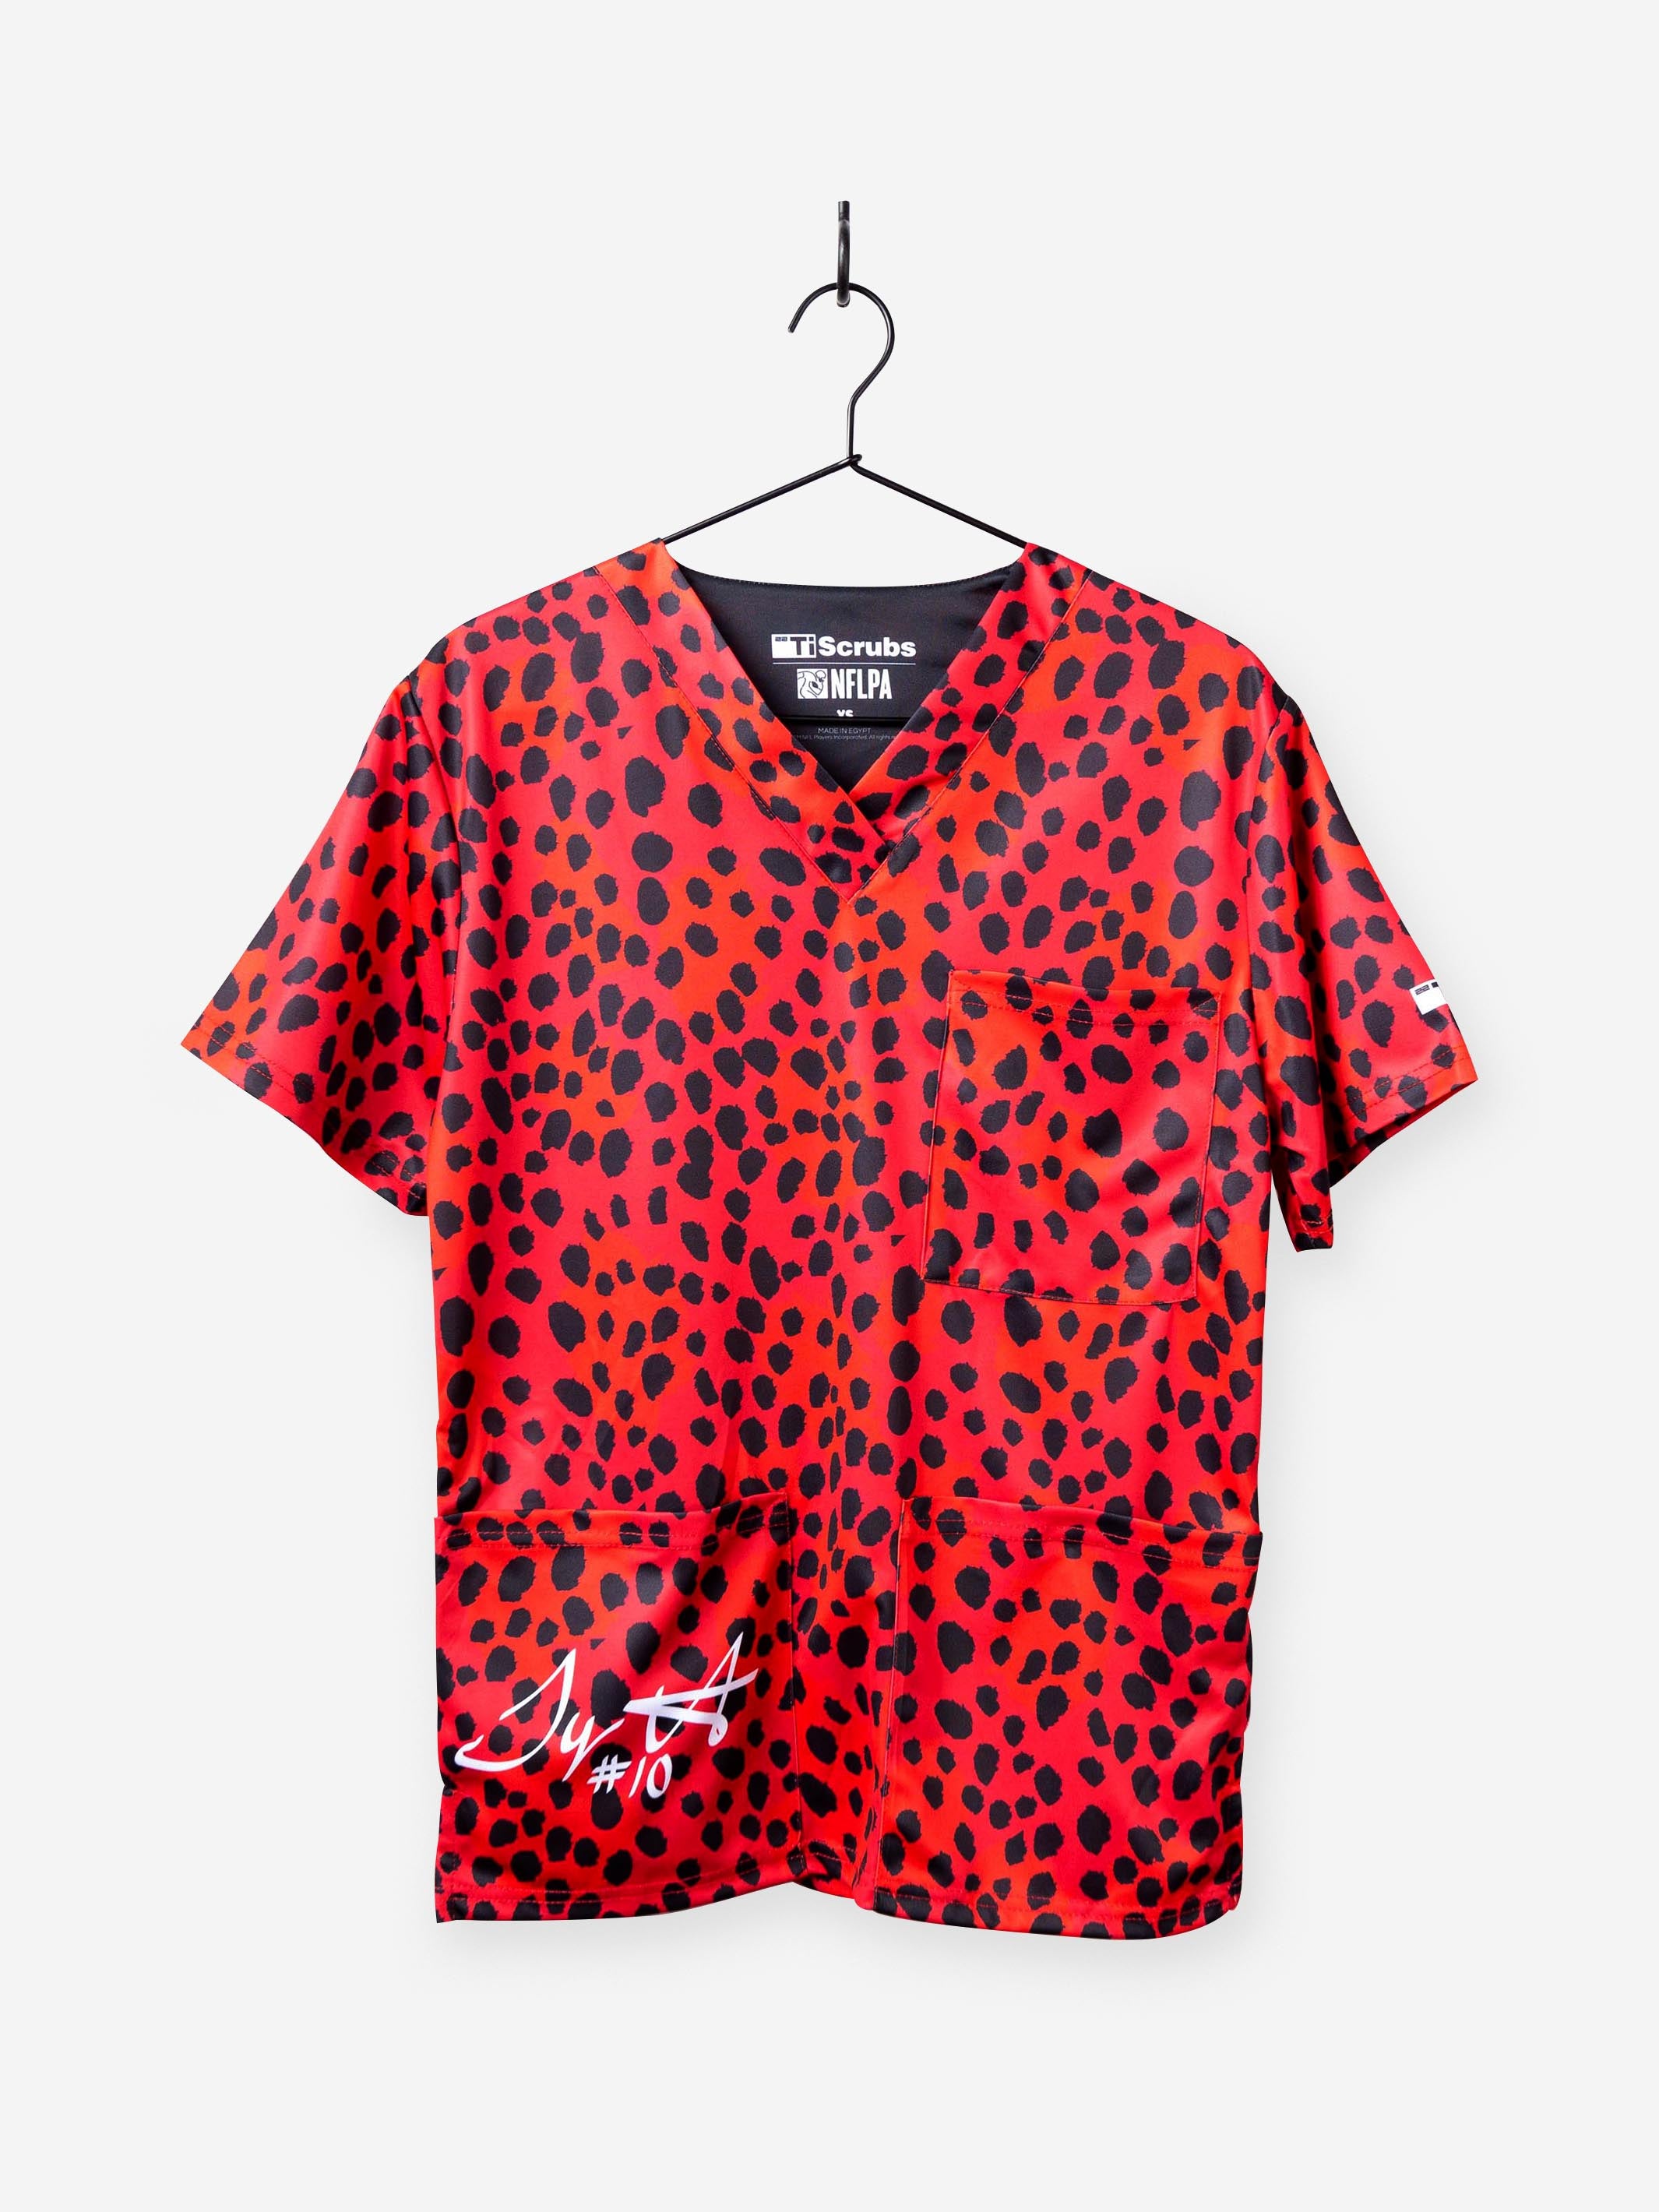 Men's NFL Tyreek Hill Cheetah Print scrub top in red and black